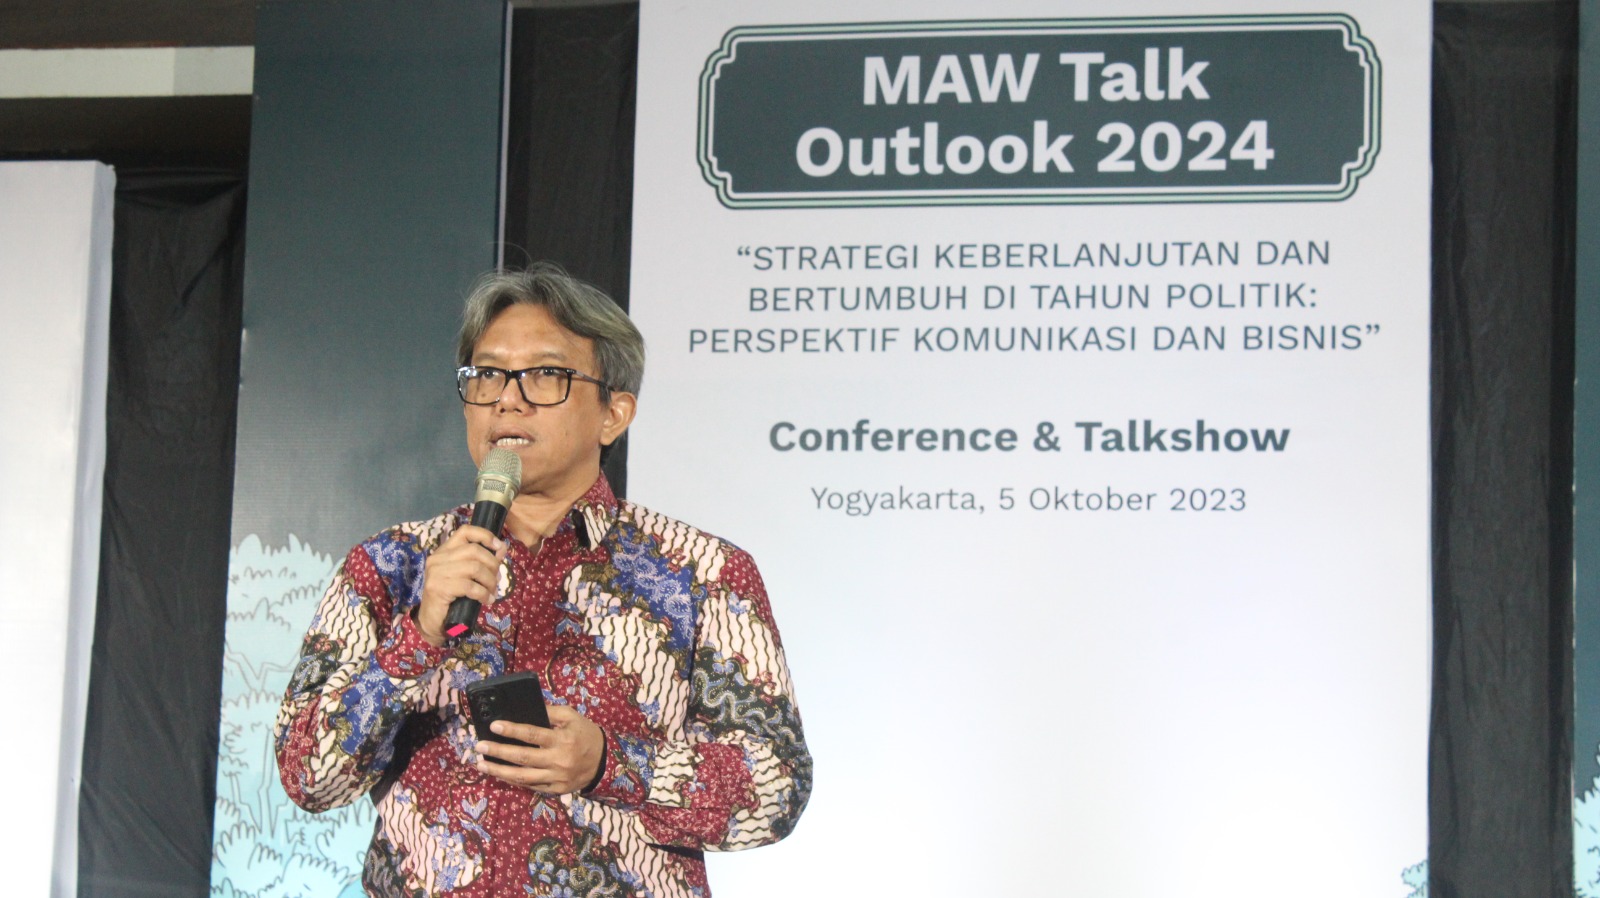 MAW Talk Outlook 2024 Menajamkan Peran Pelaku Komunikasi di Masa